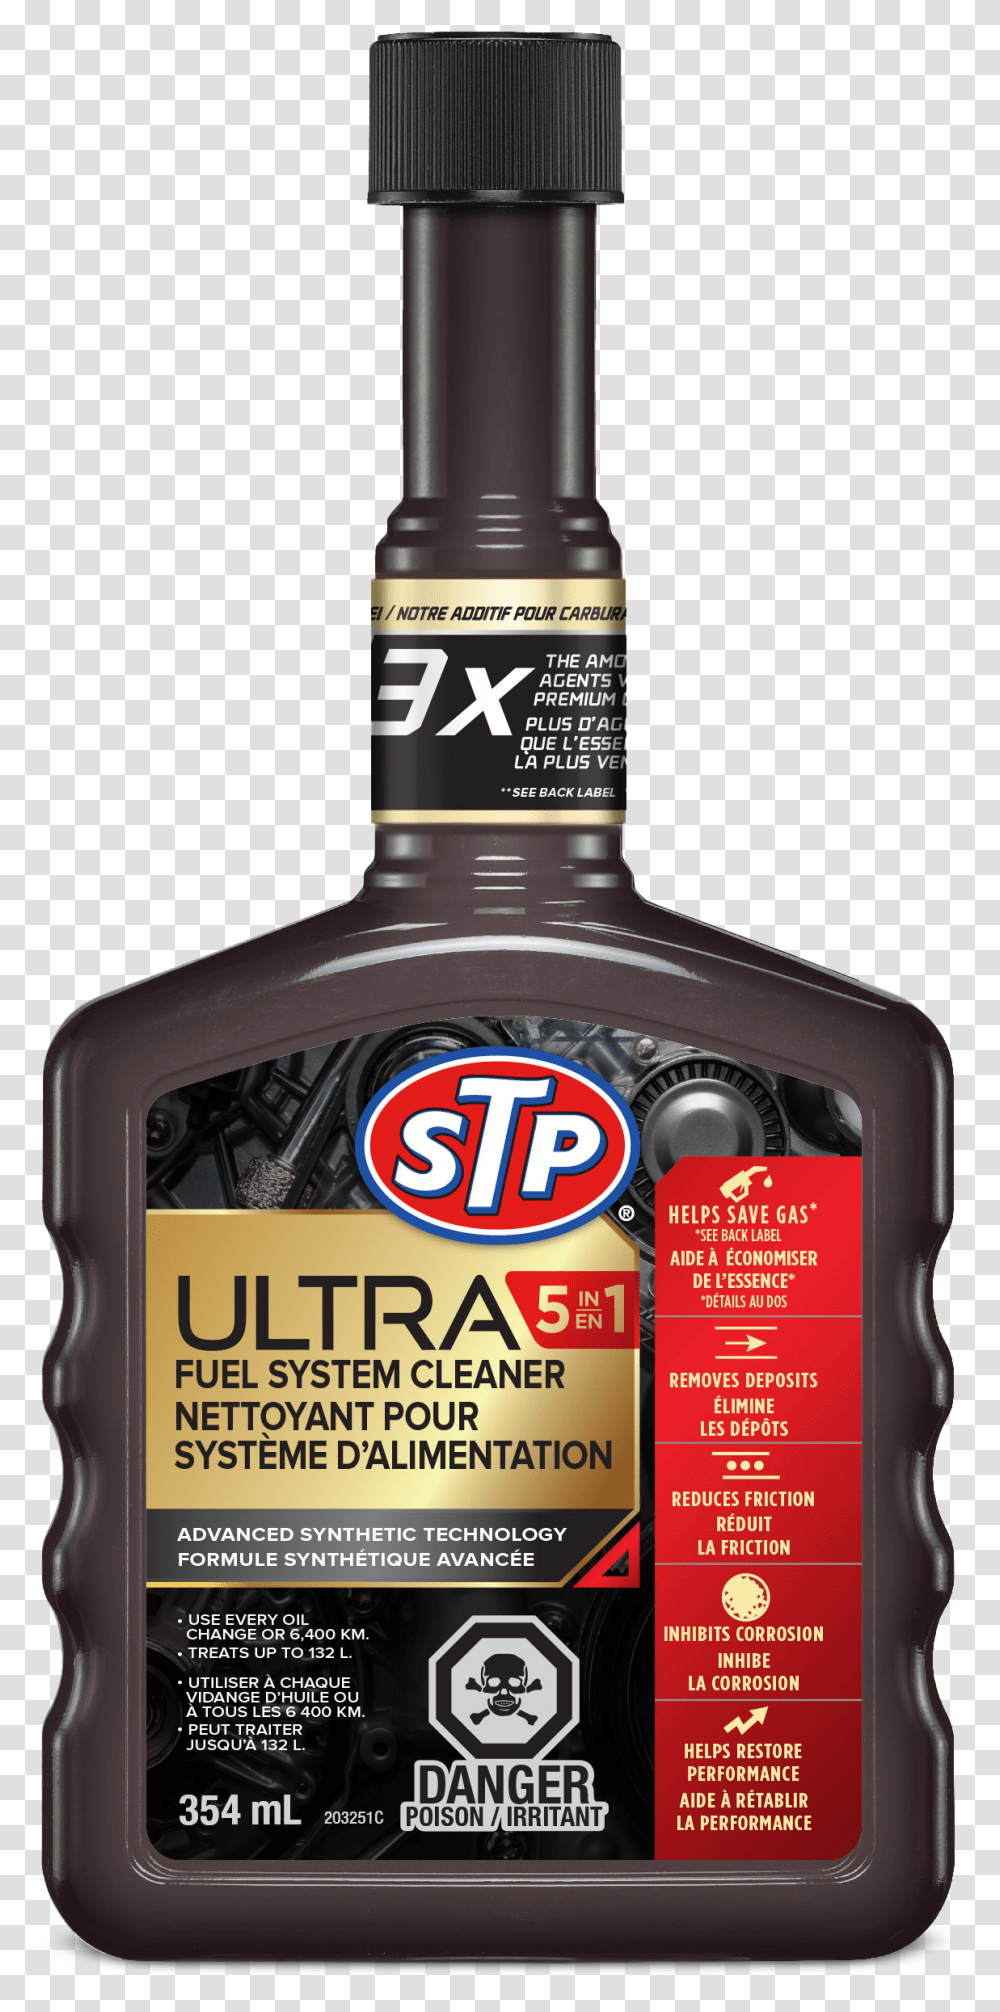 Stp Ultra 5 In 1 Fuel System Cleaner And Fuel Stabilizer, Liquor, Alcohol, Beverage, Bottle Transparent Png